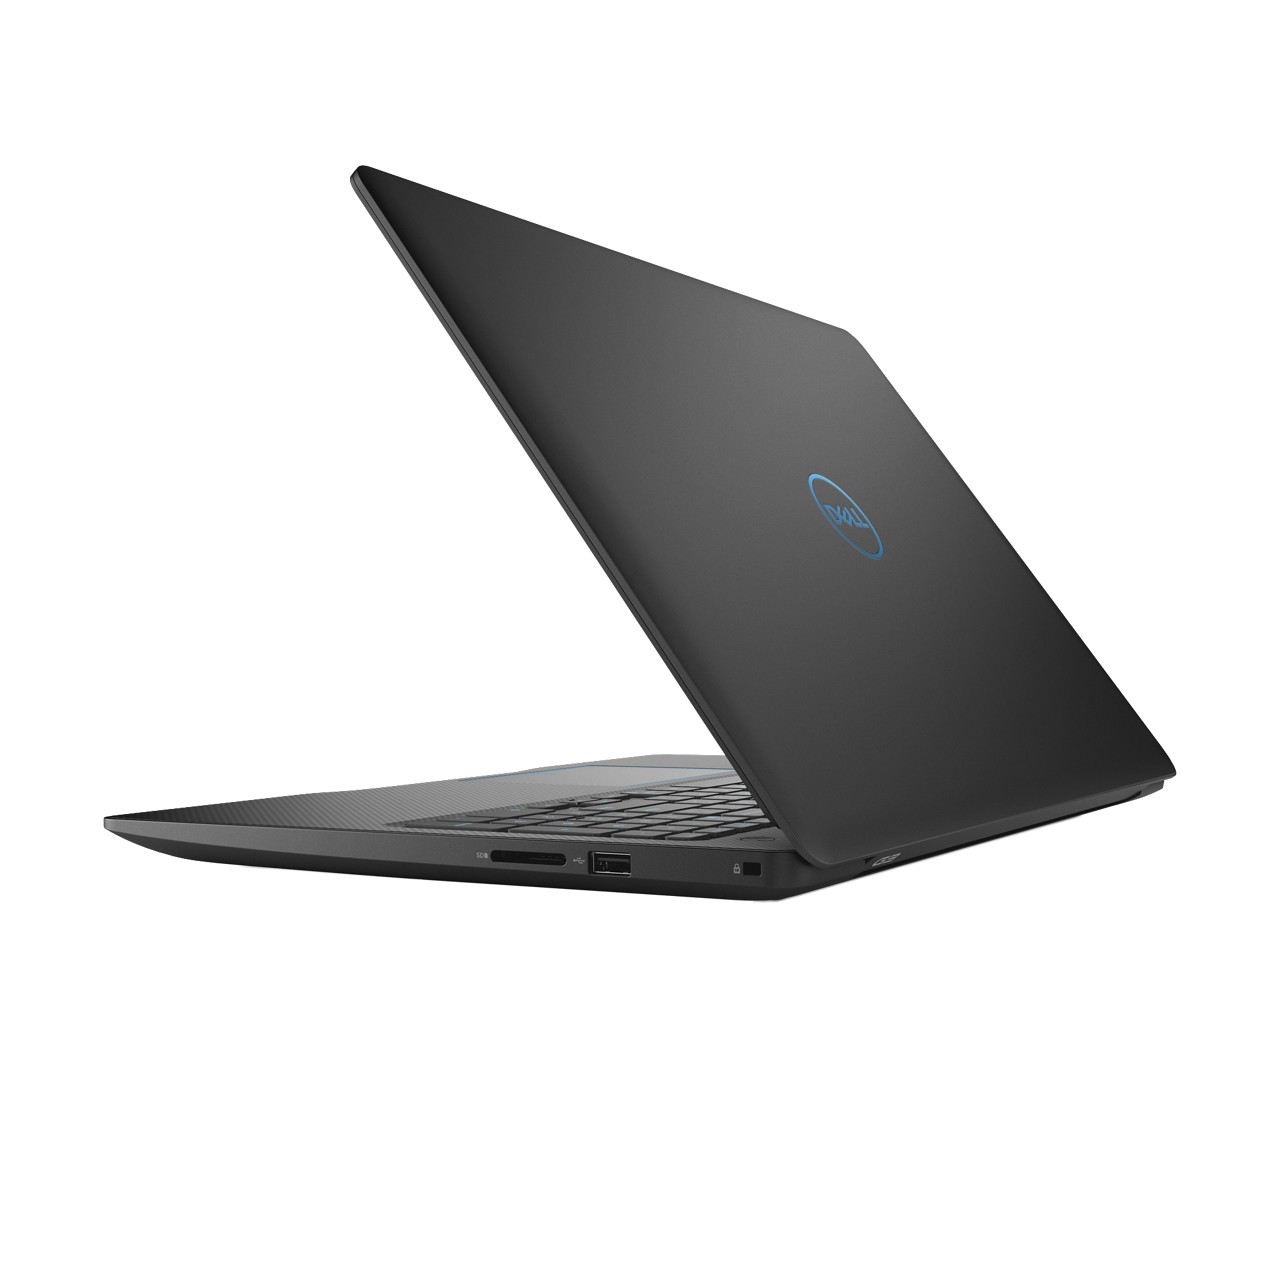 Dell G3 Gaming Laptop 15.6" Full HD, Intel Core i5-8300H, NVIDIA GeForce GTX 1050 4GB, 1TB HDD + 16GB Intel Optane Storage, 8GB RAM, Windows 10 - Black - G3579-5245BLK - image 2 of 6